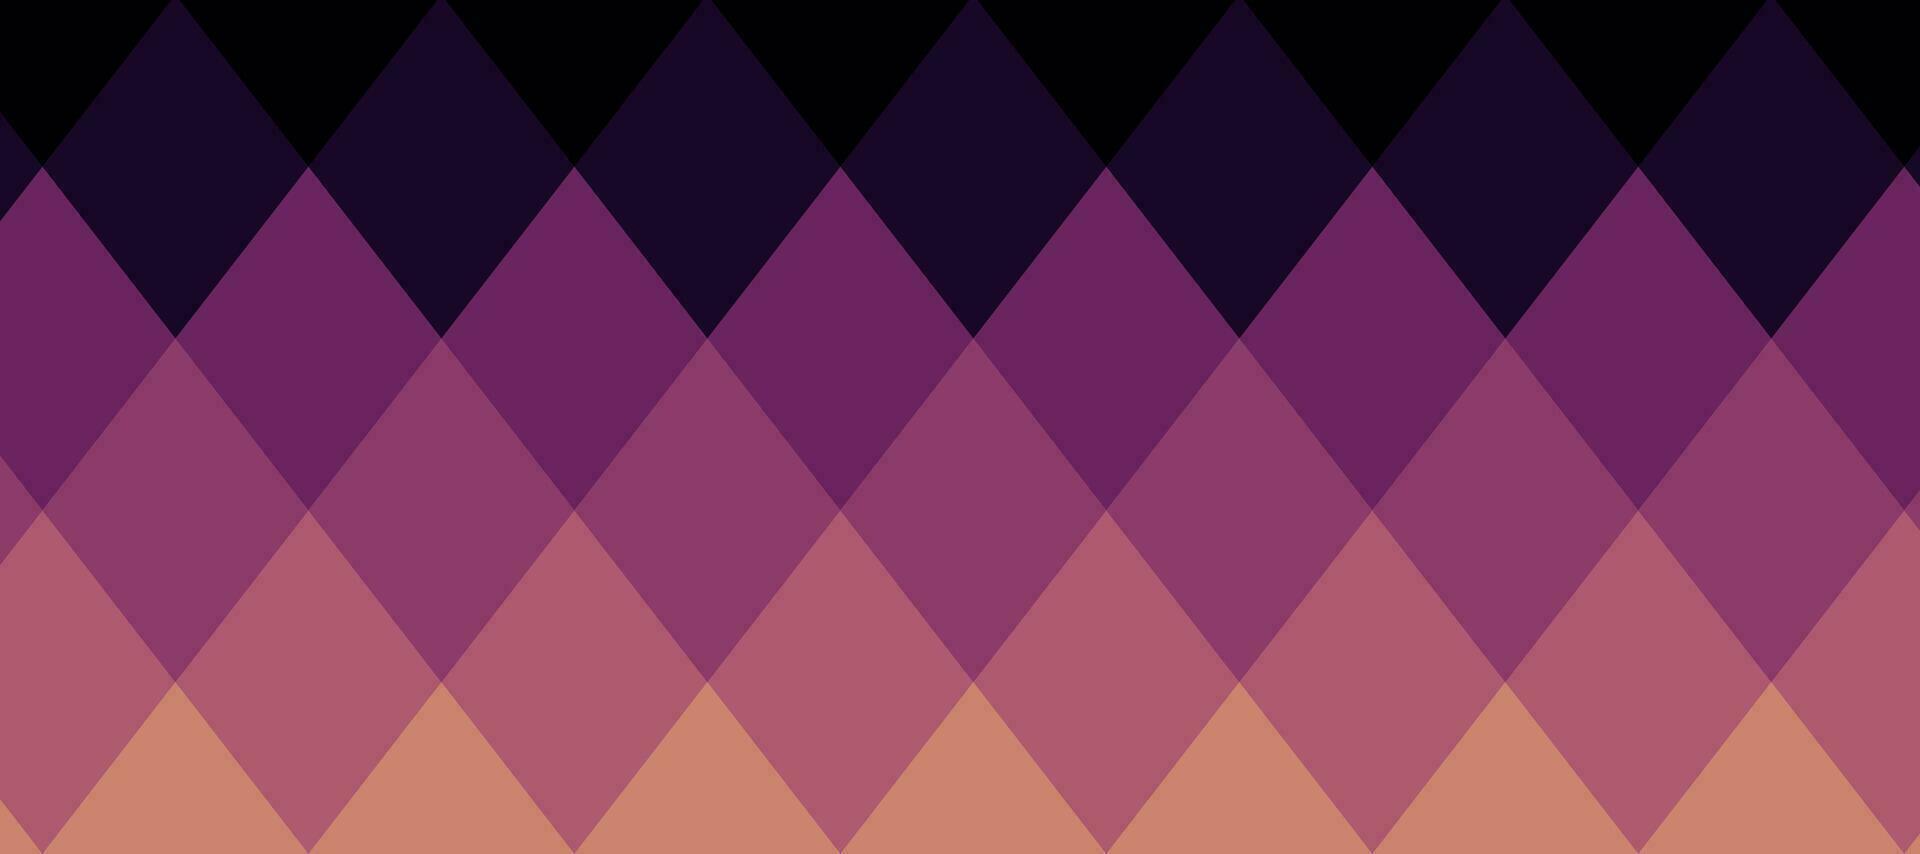 dark violet argyle gingham wrap paper pattern design background vector